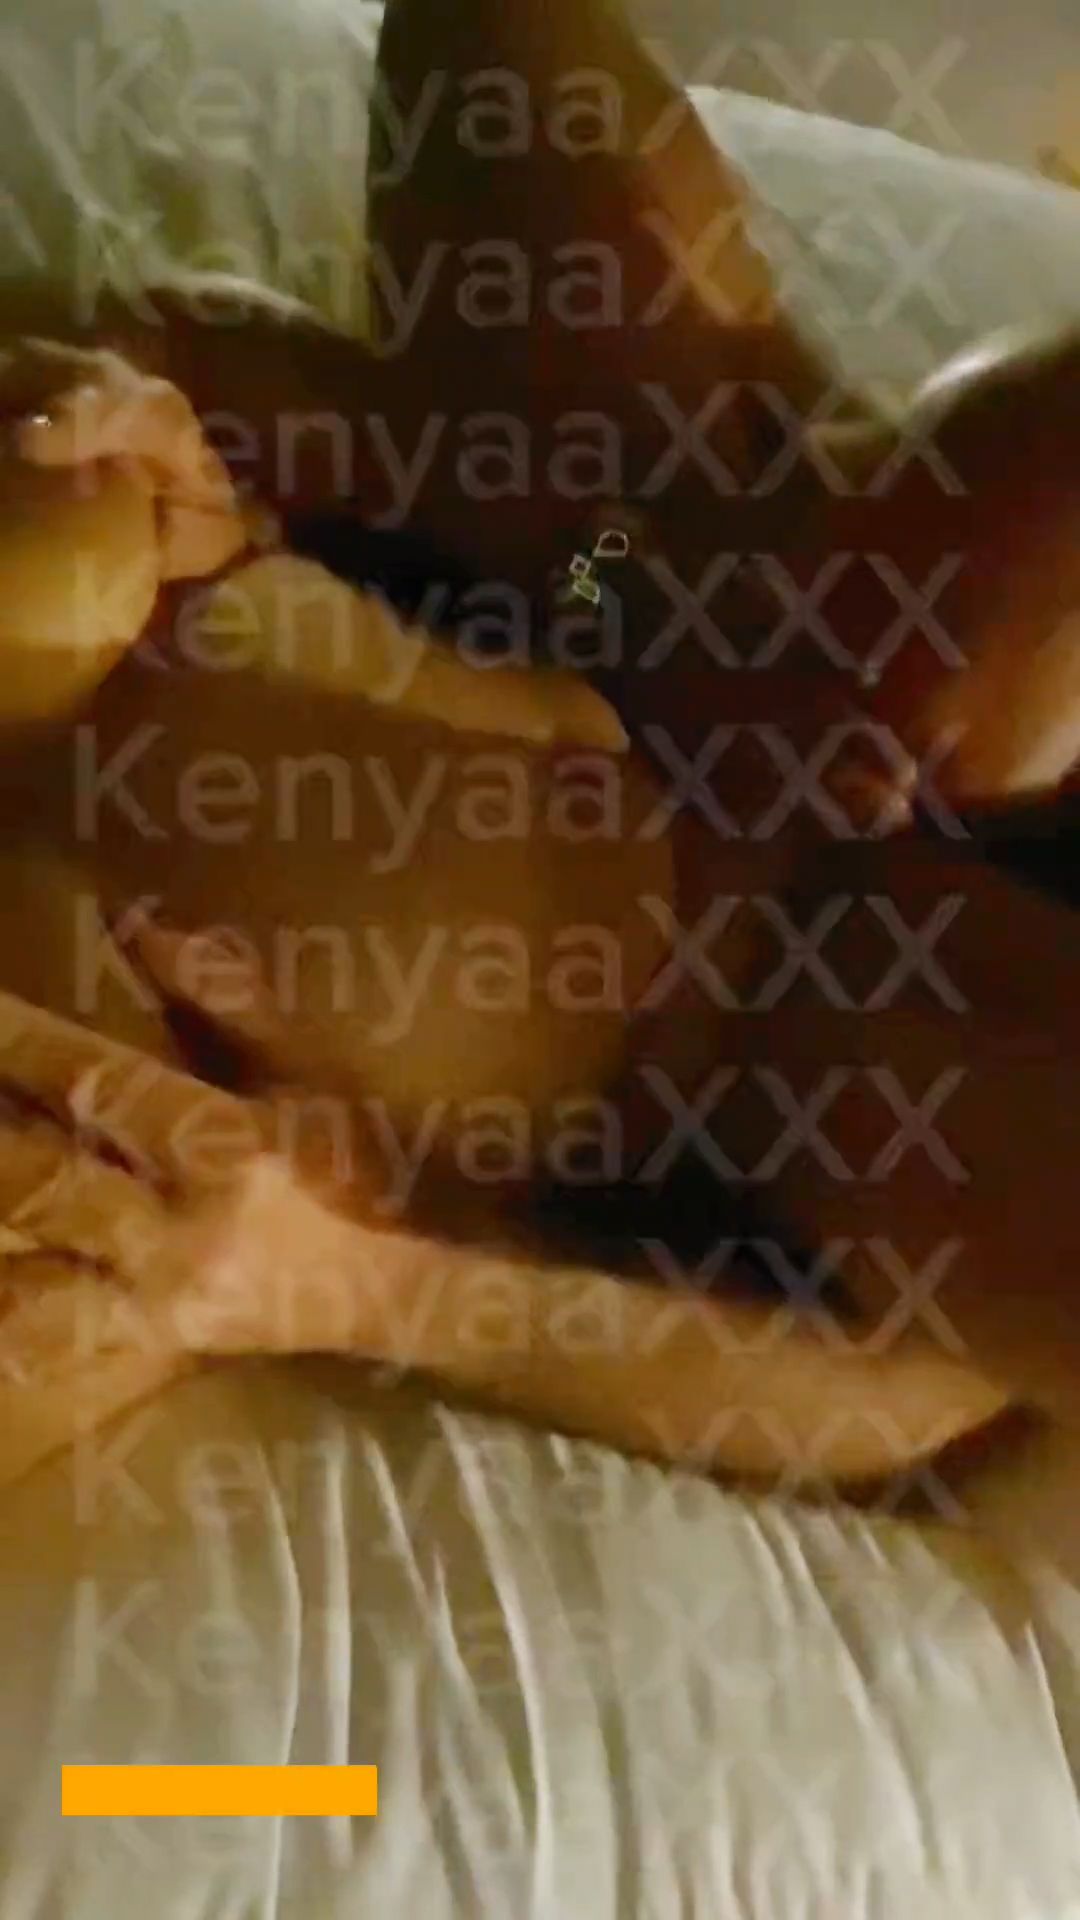 Kenya - Cunilinguis